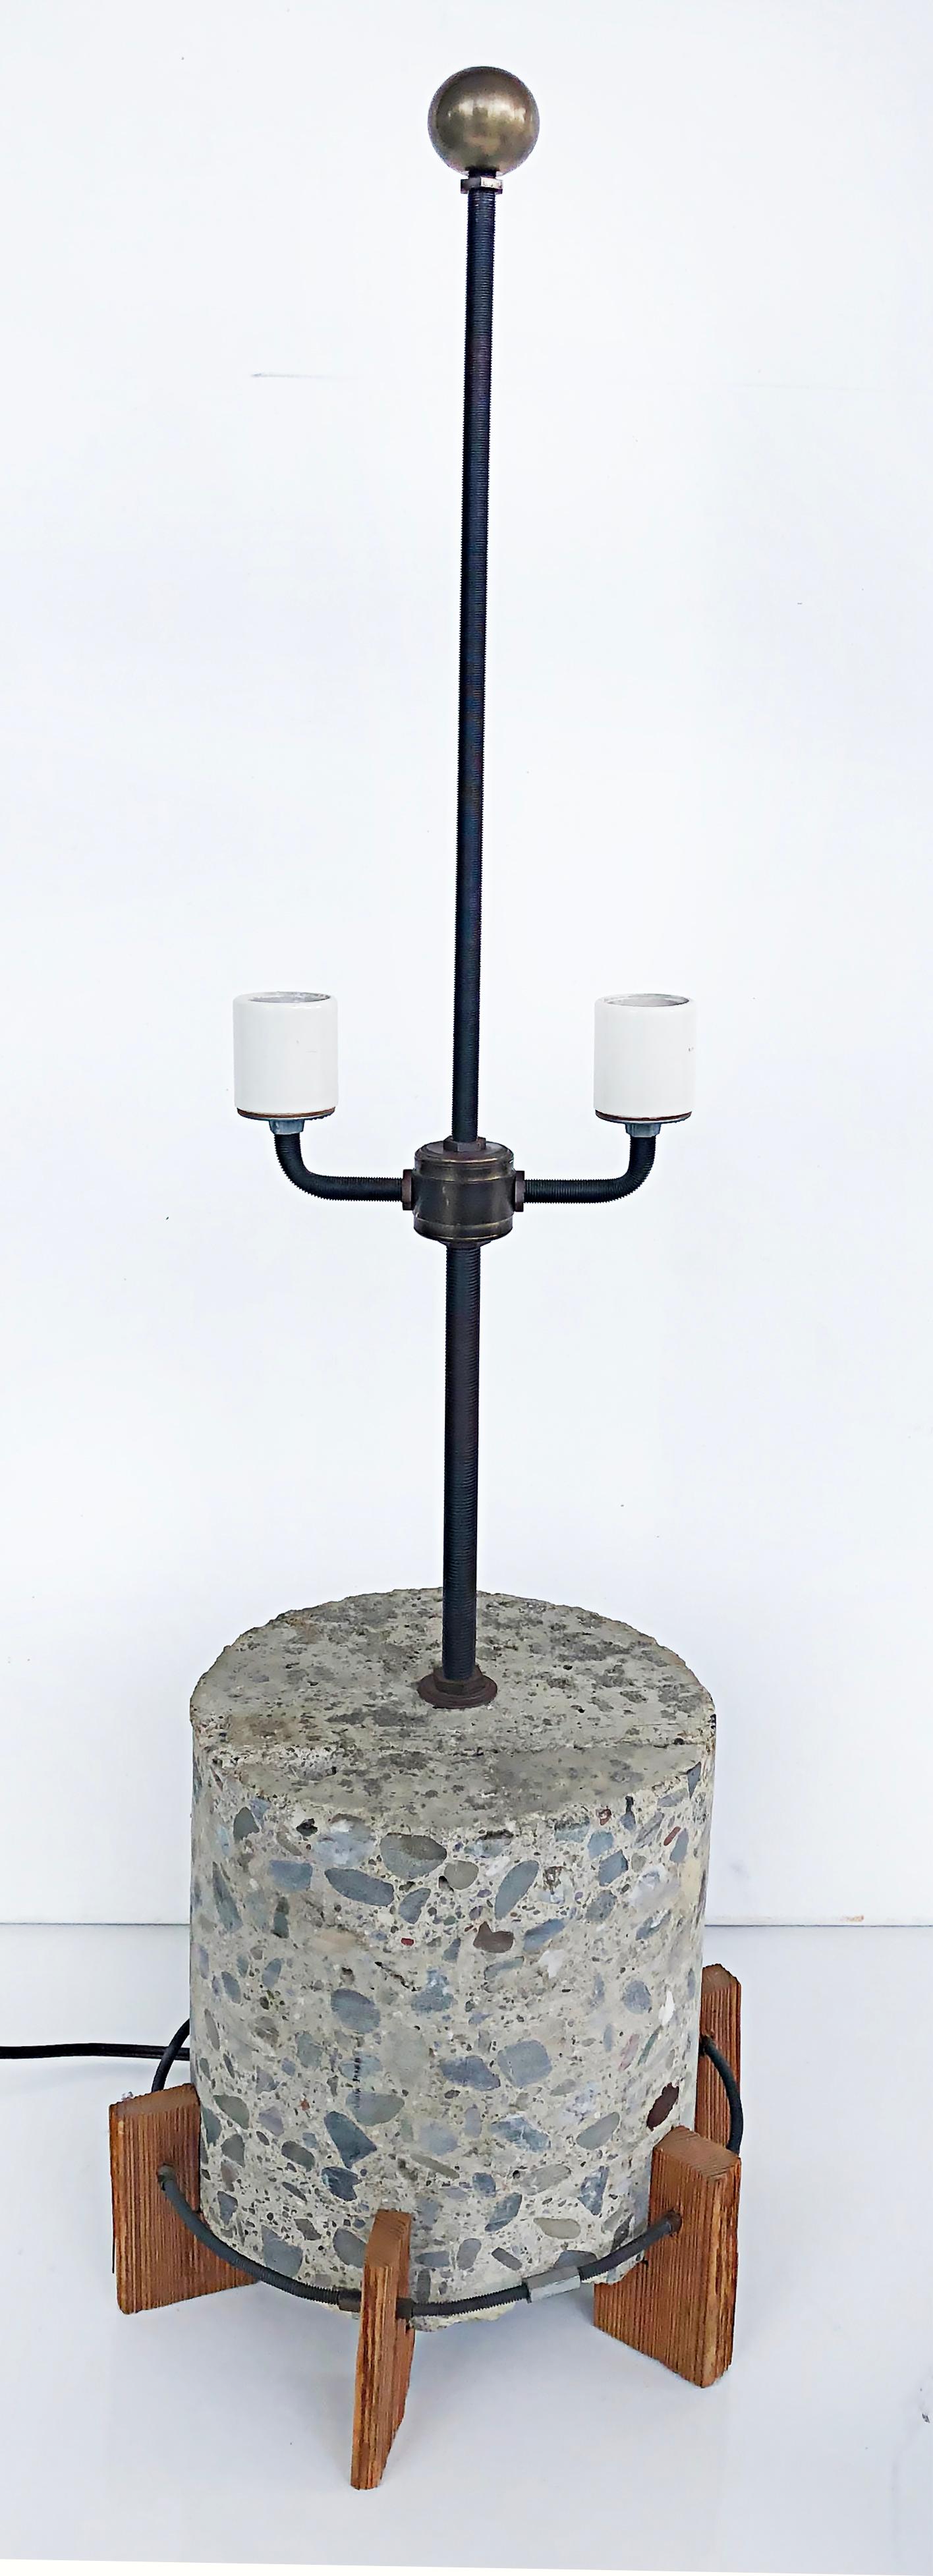 American Vintage Richard Lee Parker Studio Terrazzo Wood Table Lamp, Signed 1992 For Sale